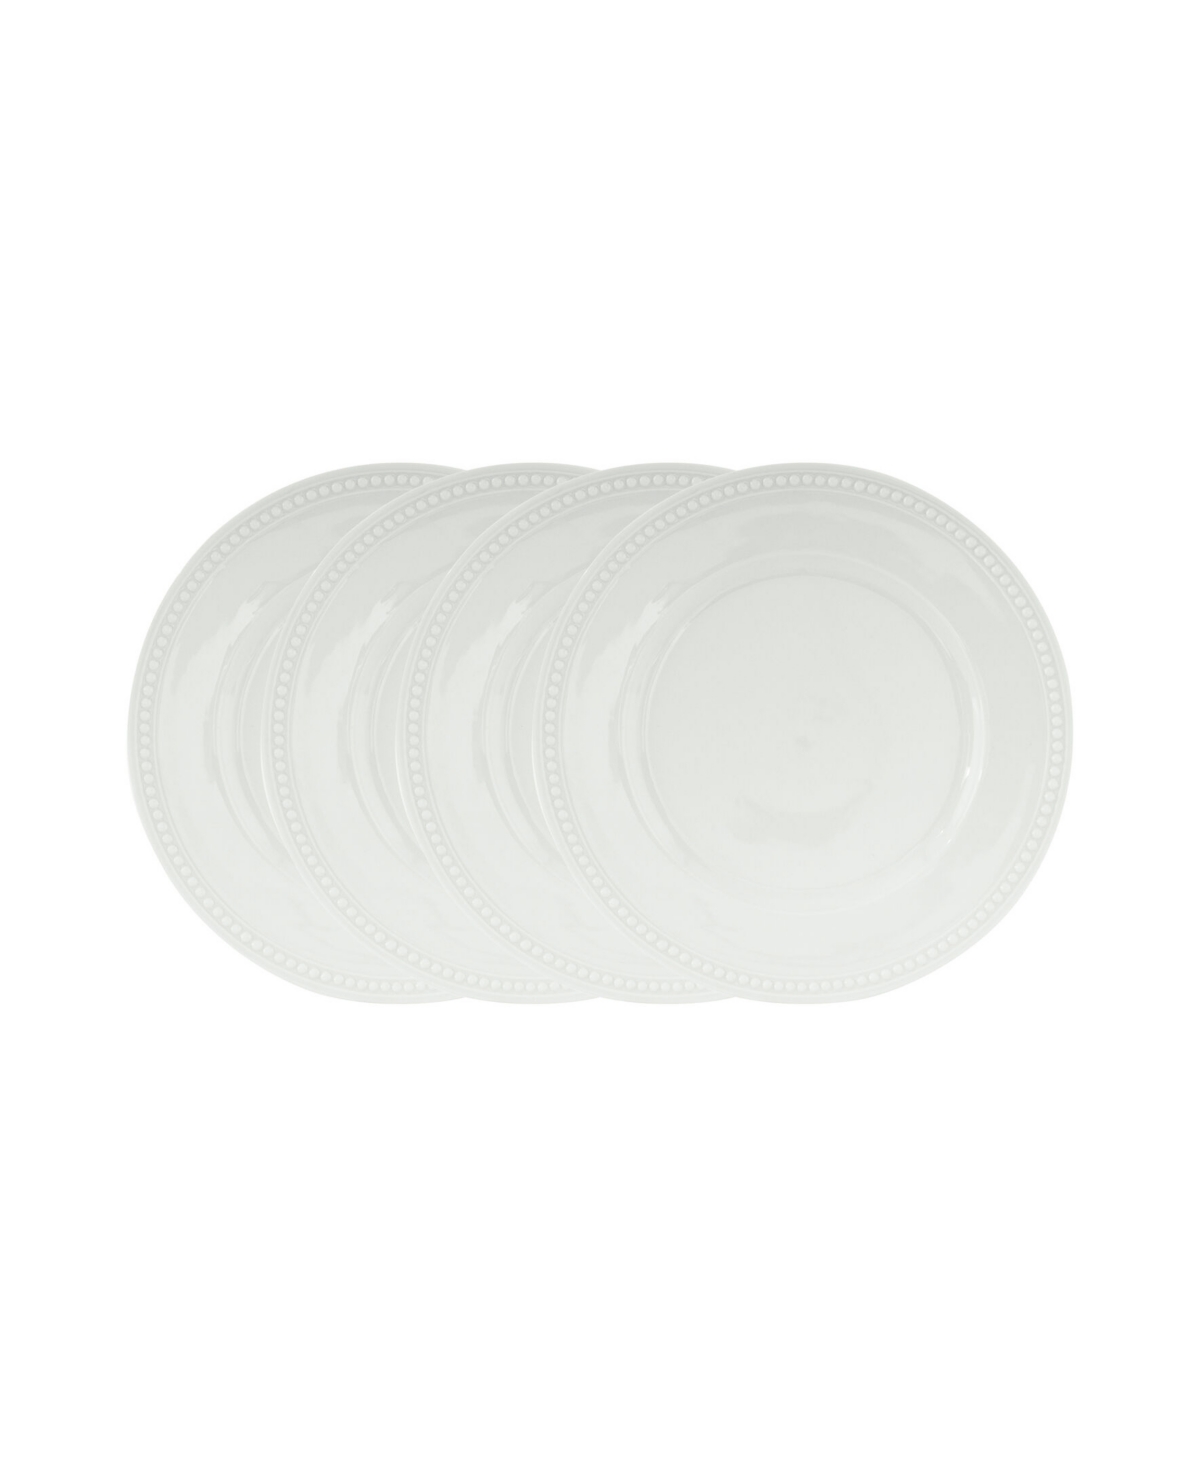 Everyday Whiteware Beaded Dinner Plate 4 Piece Set - White